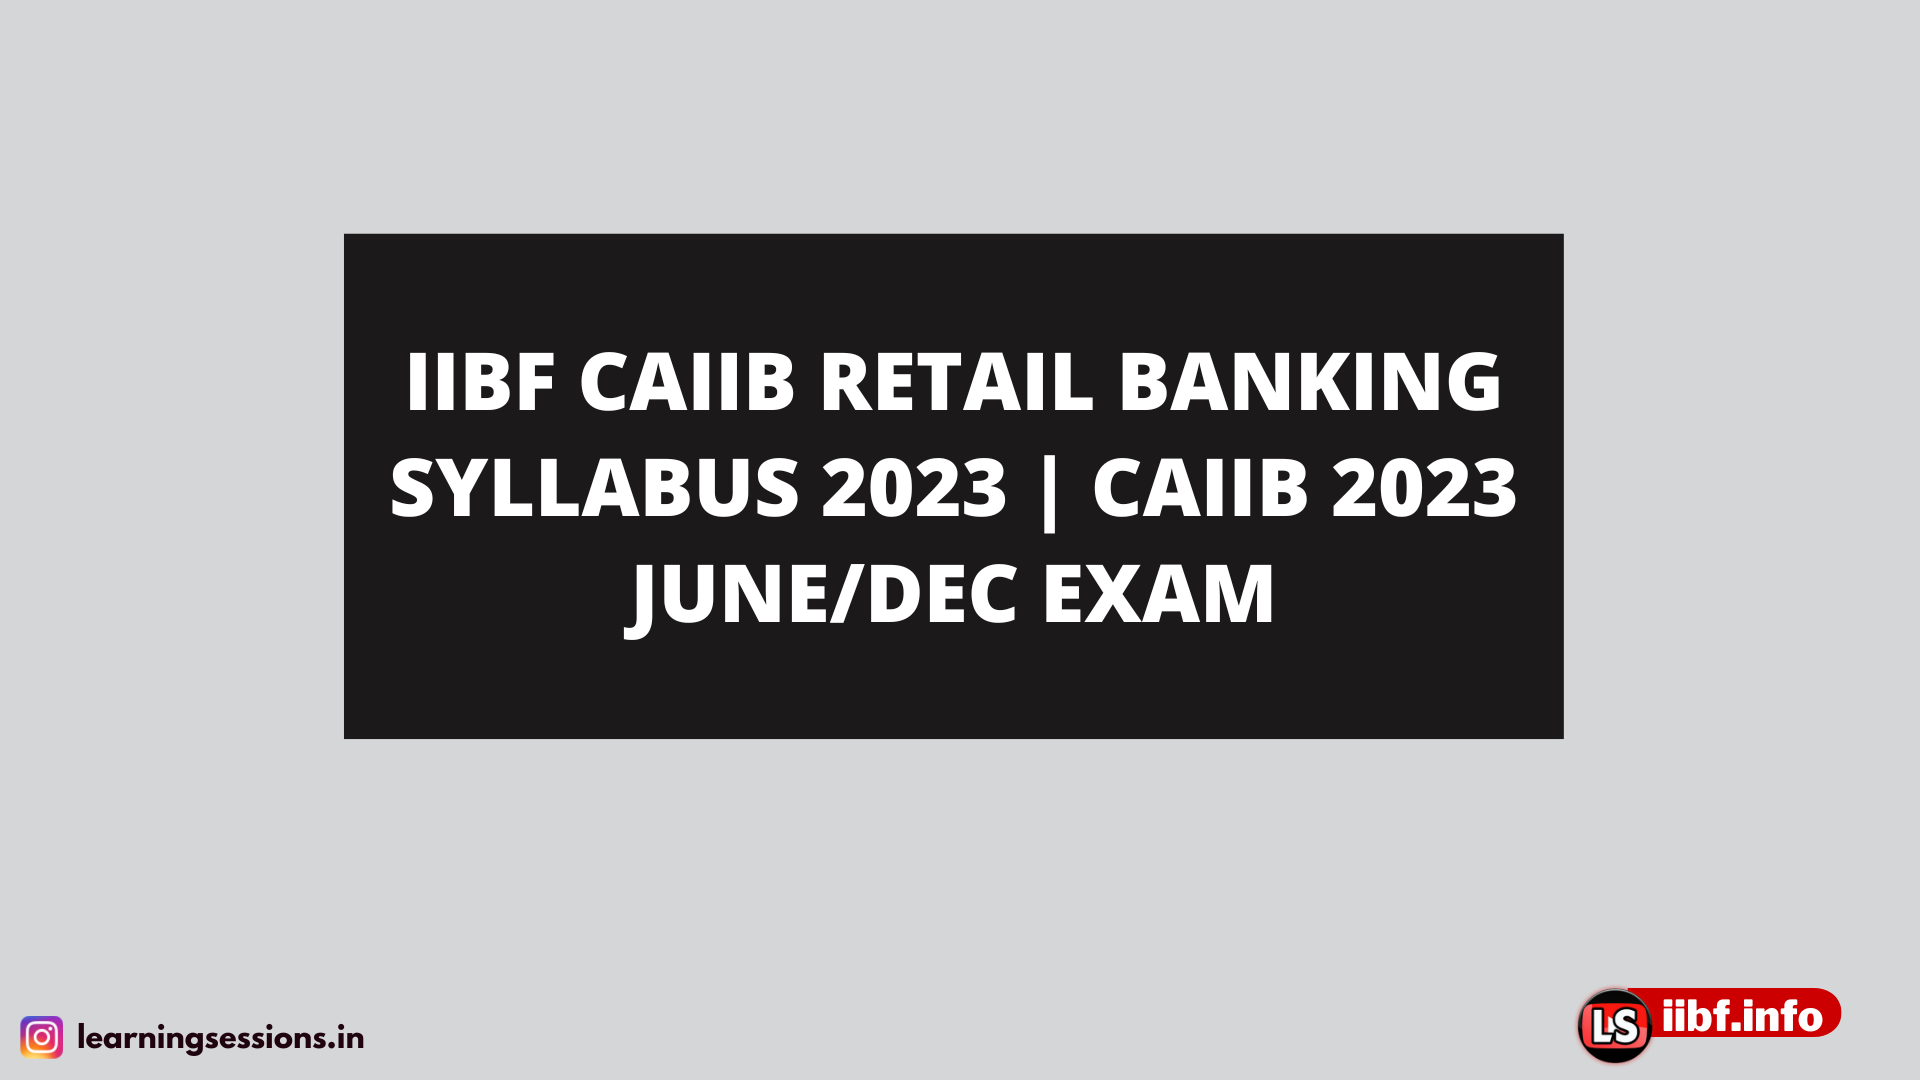 IIBF CAIIB RETAIL BANKING SYLLABUS 2022